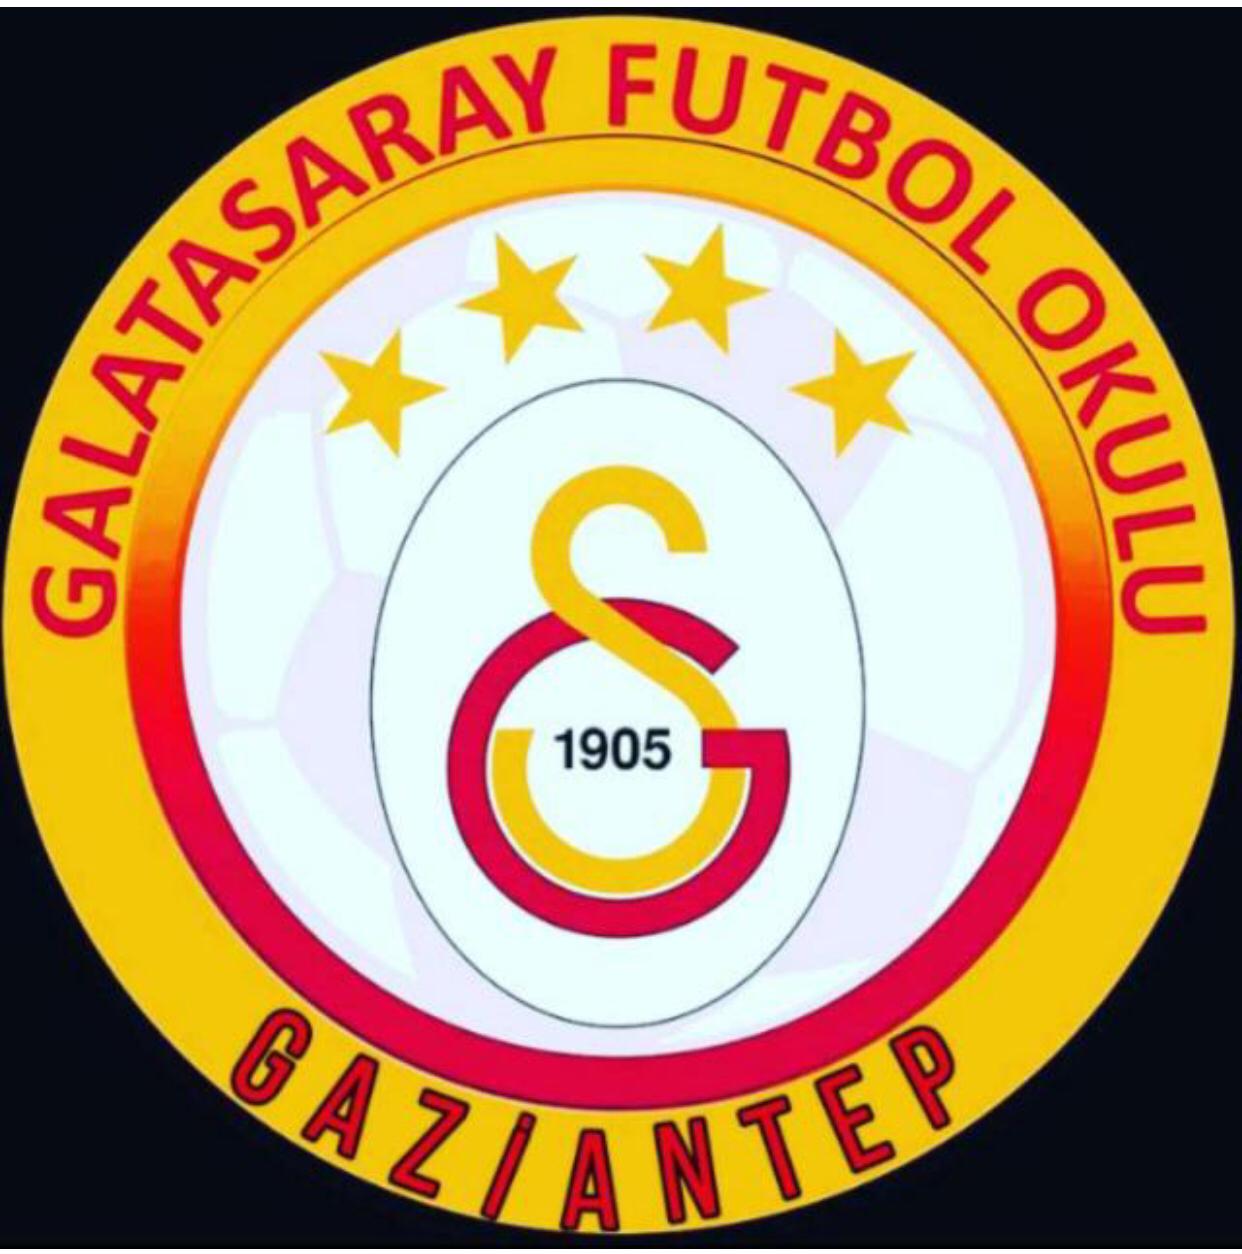 Gaziantep Galatasaray Futbol Okulu